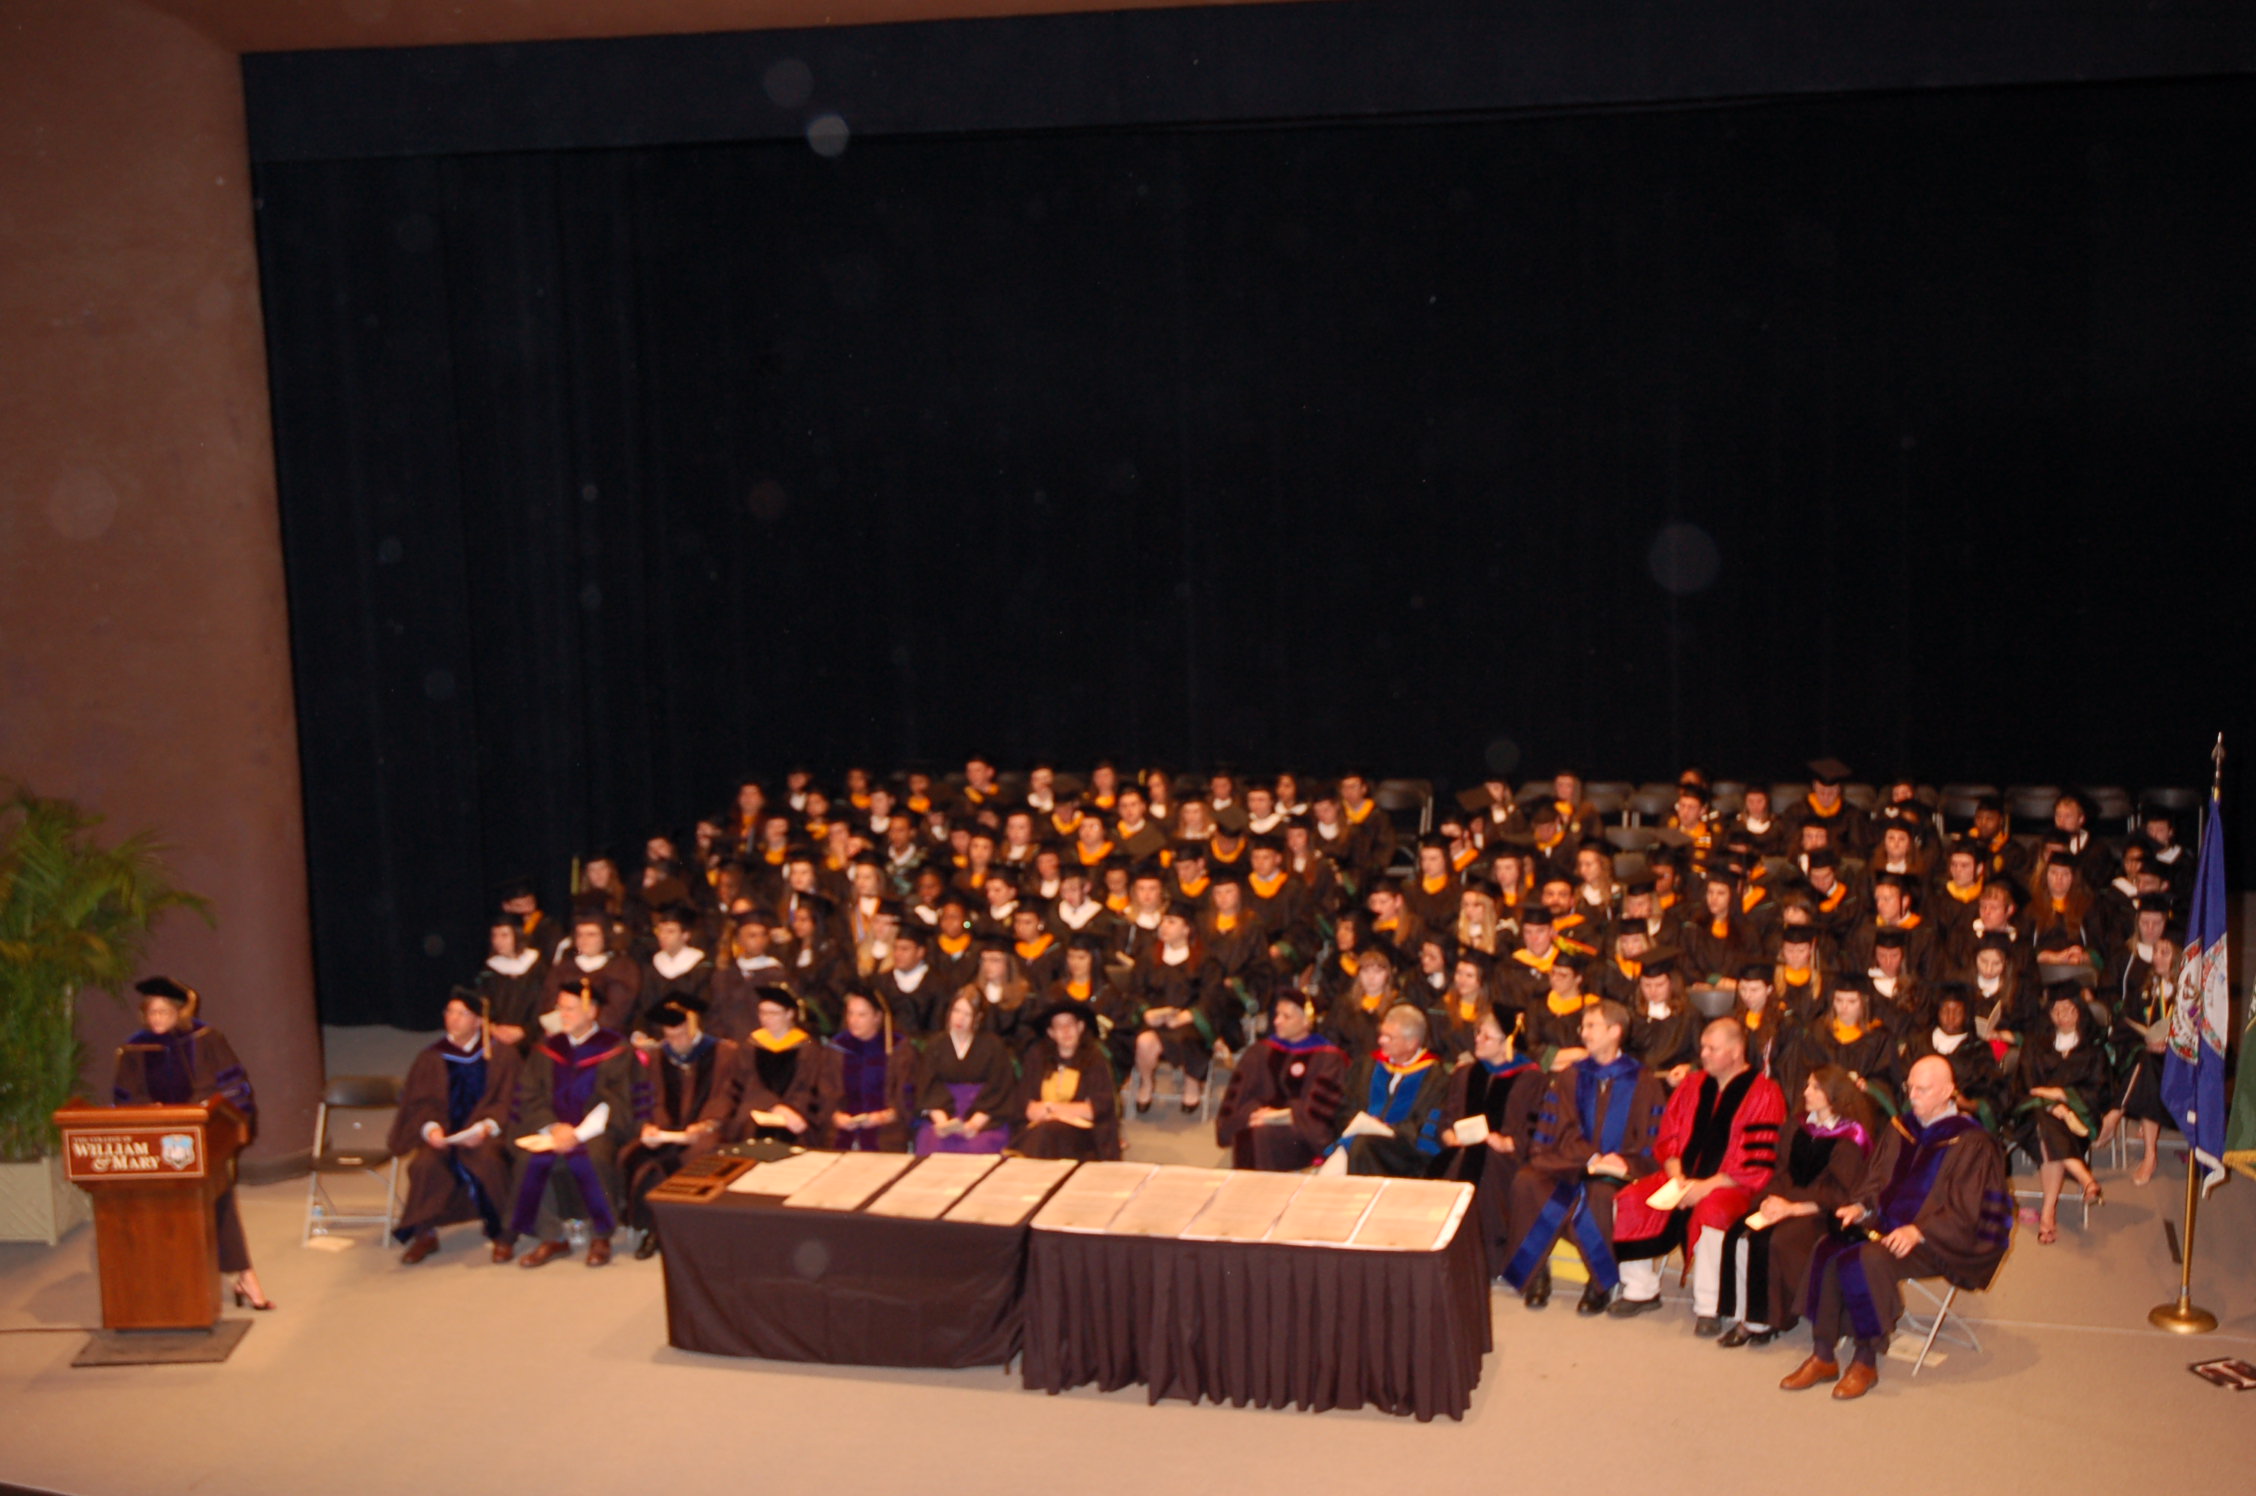 Overview shot of graduates